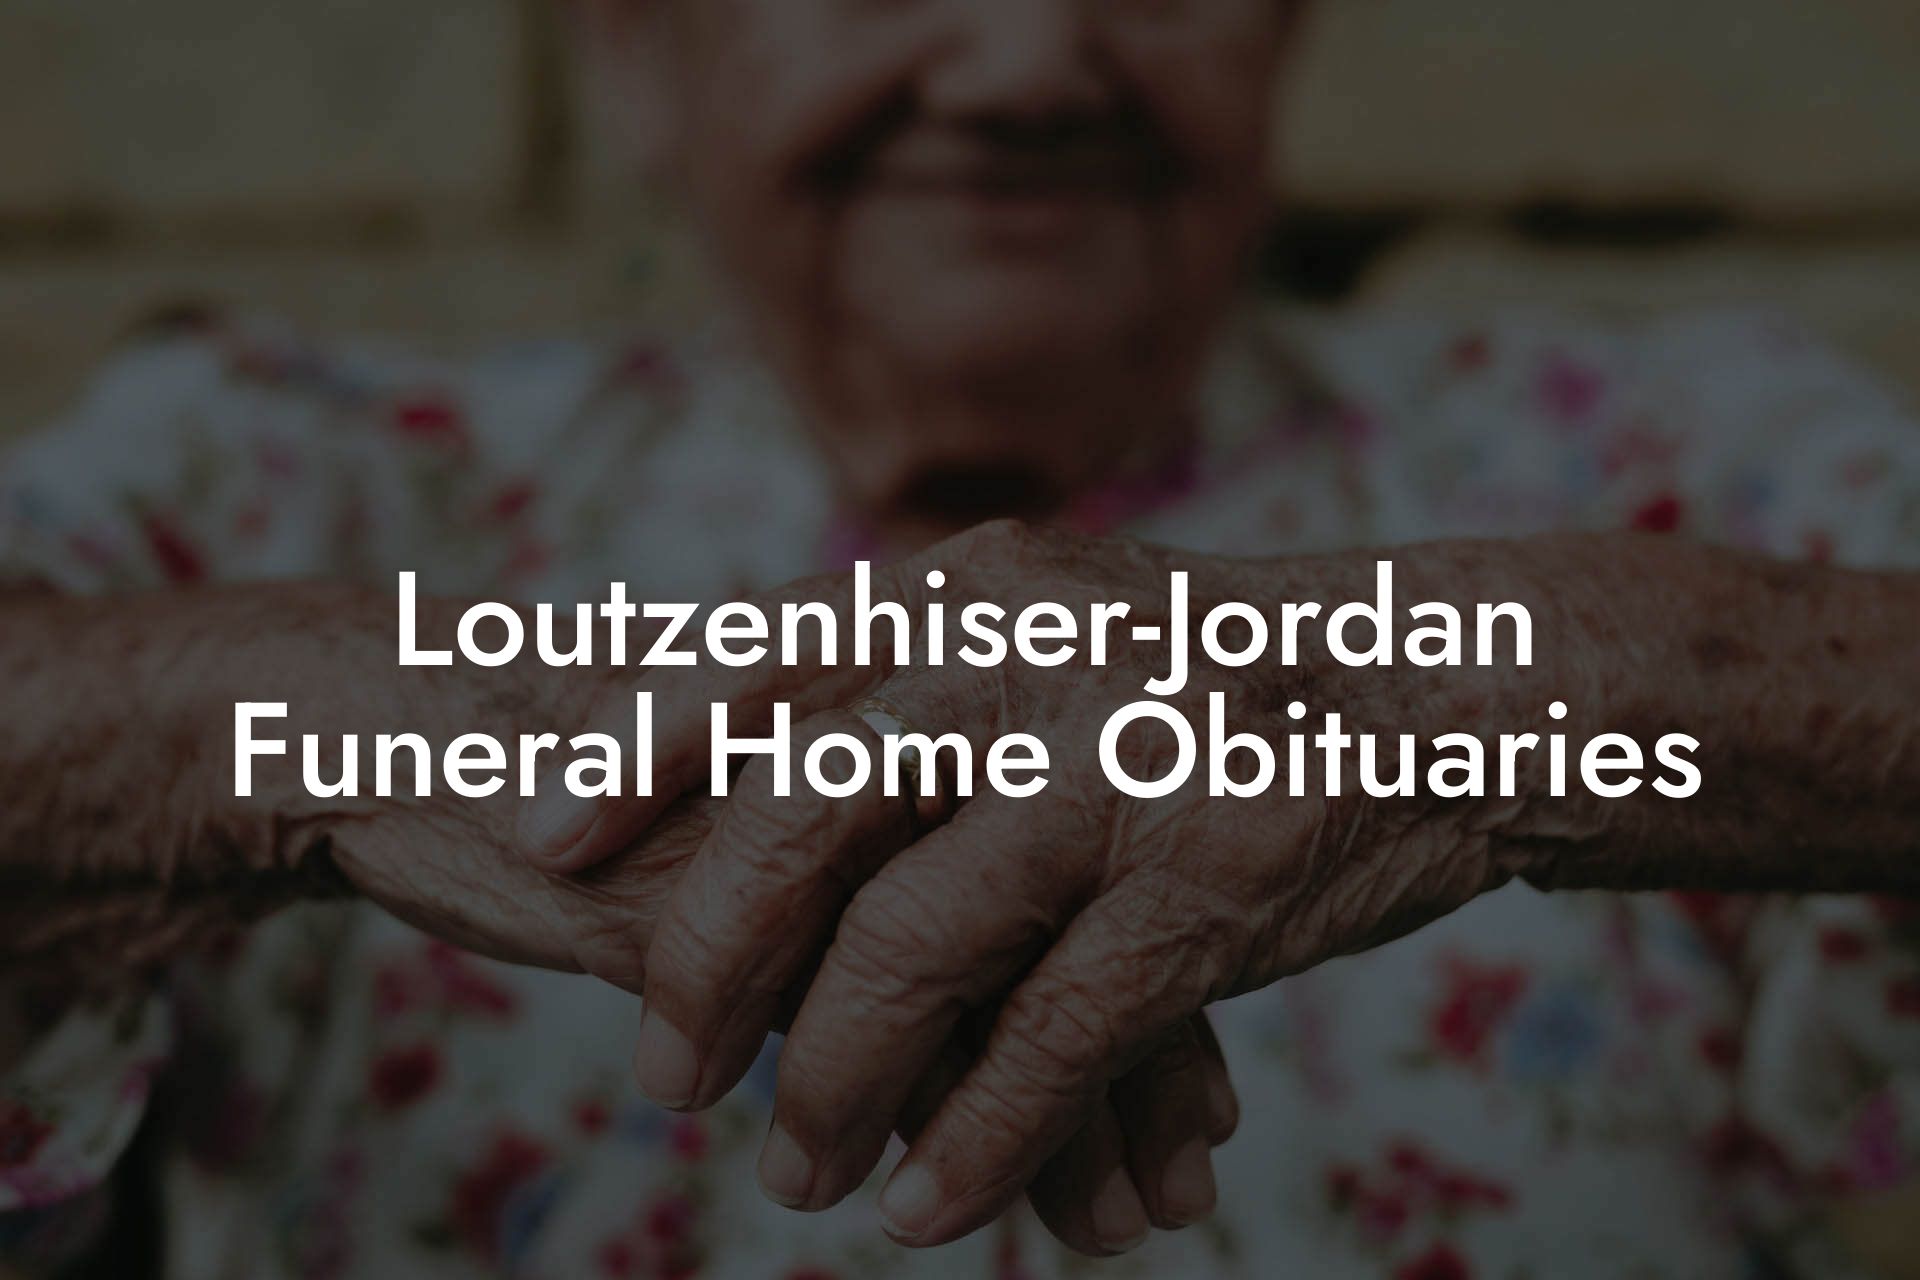 Loutzenhiser-Jordan Funeral Home Obituaries